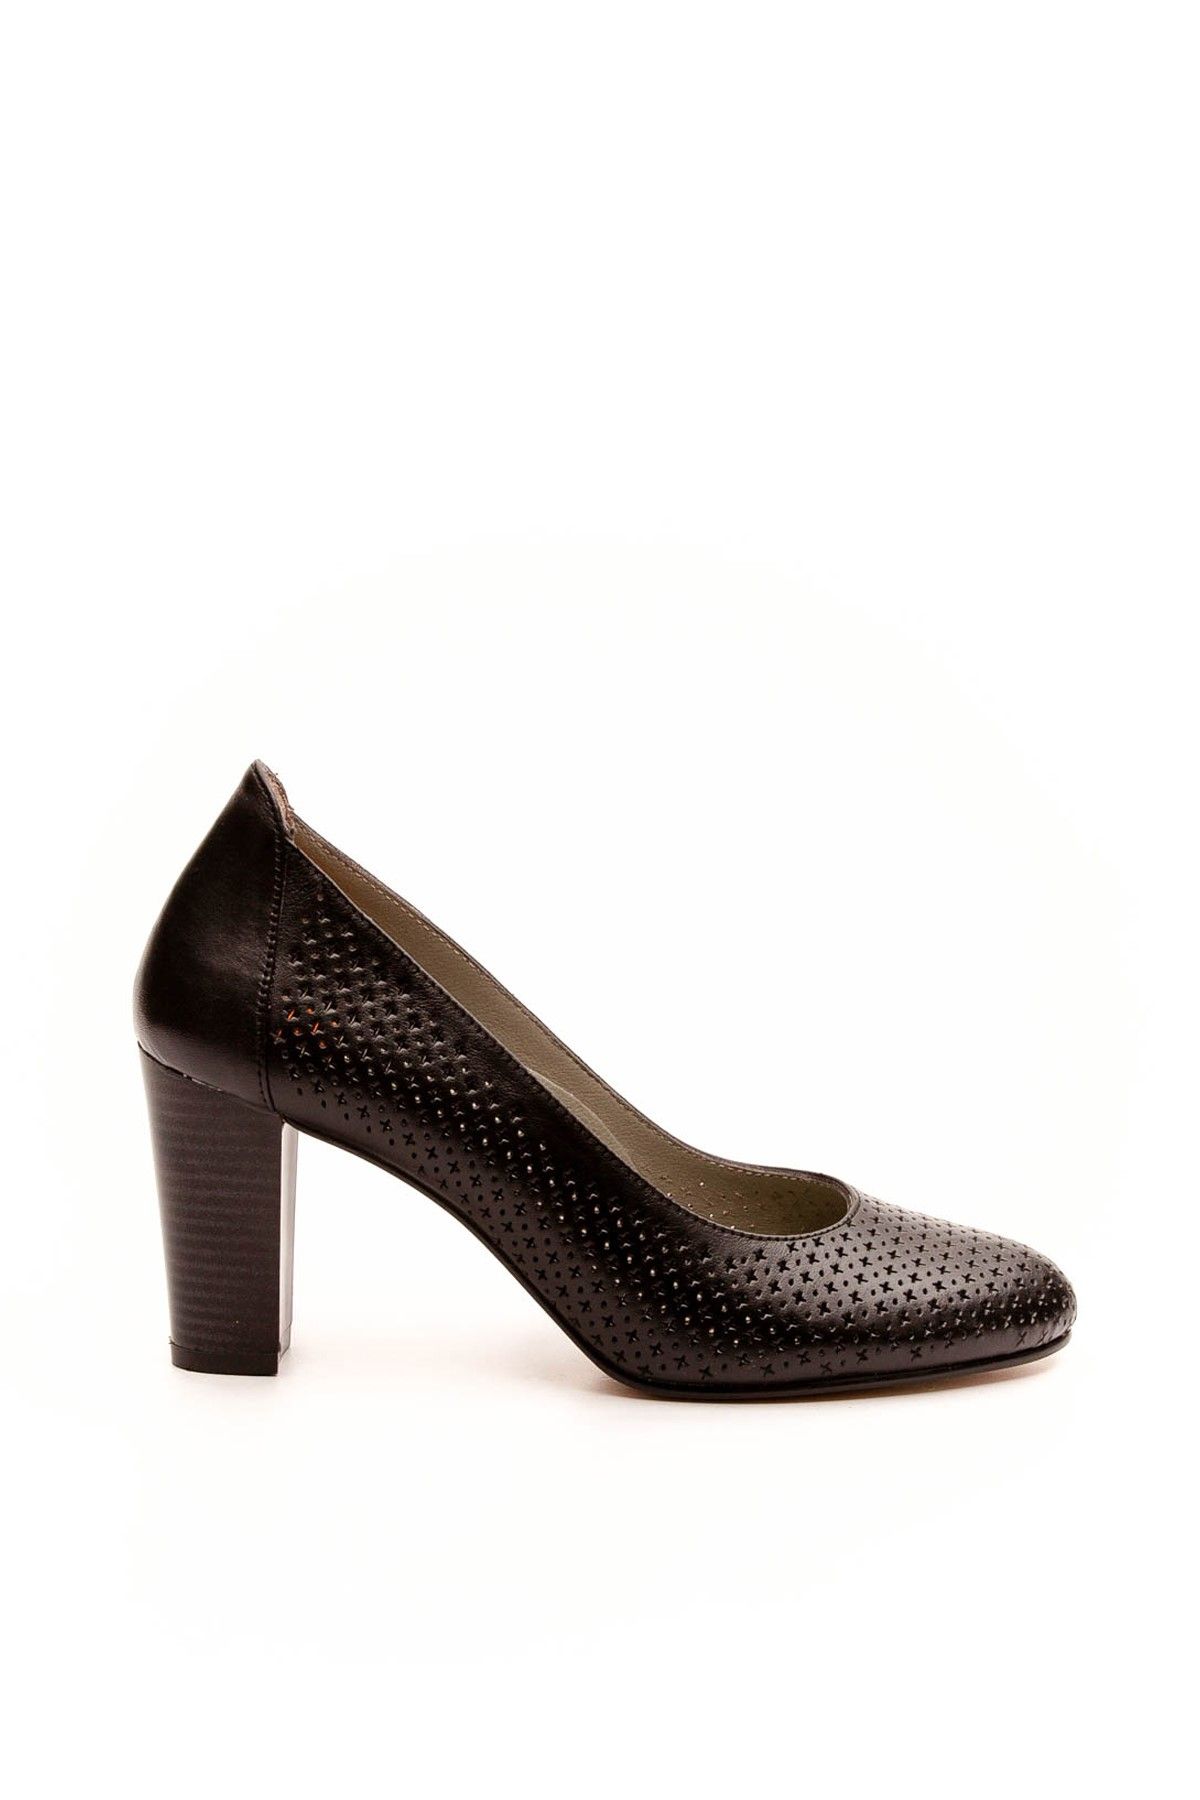 Deripabuc - Anatomik Hakiki Deri Siyah Kadın Topuklu Ayakkabı SHN-0298